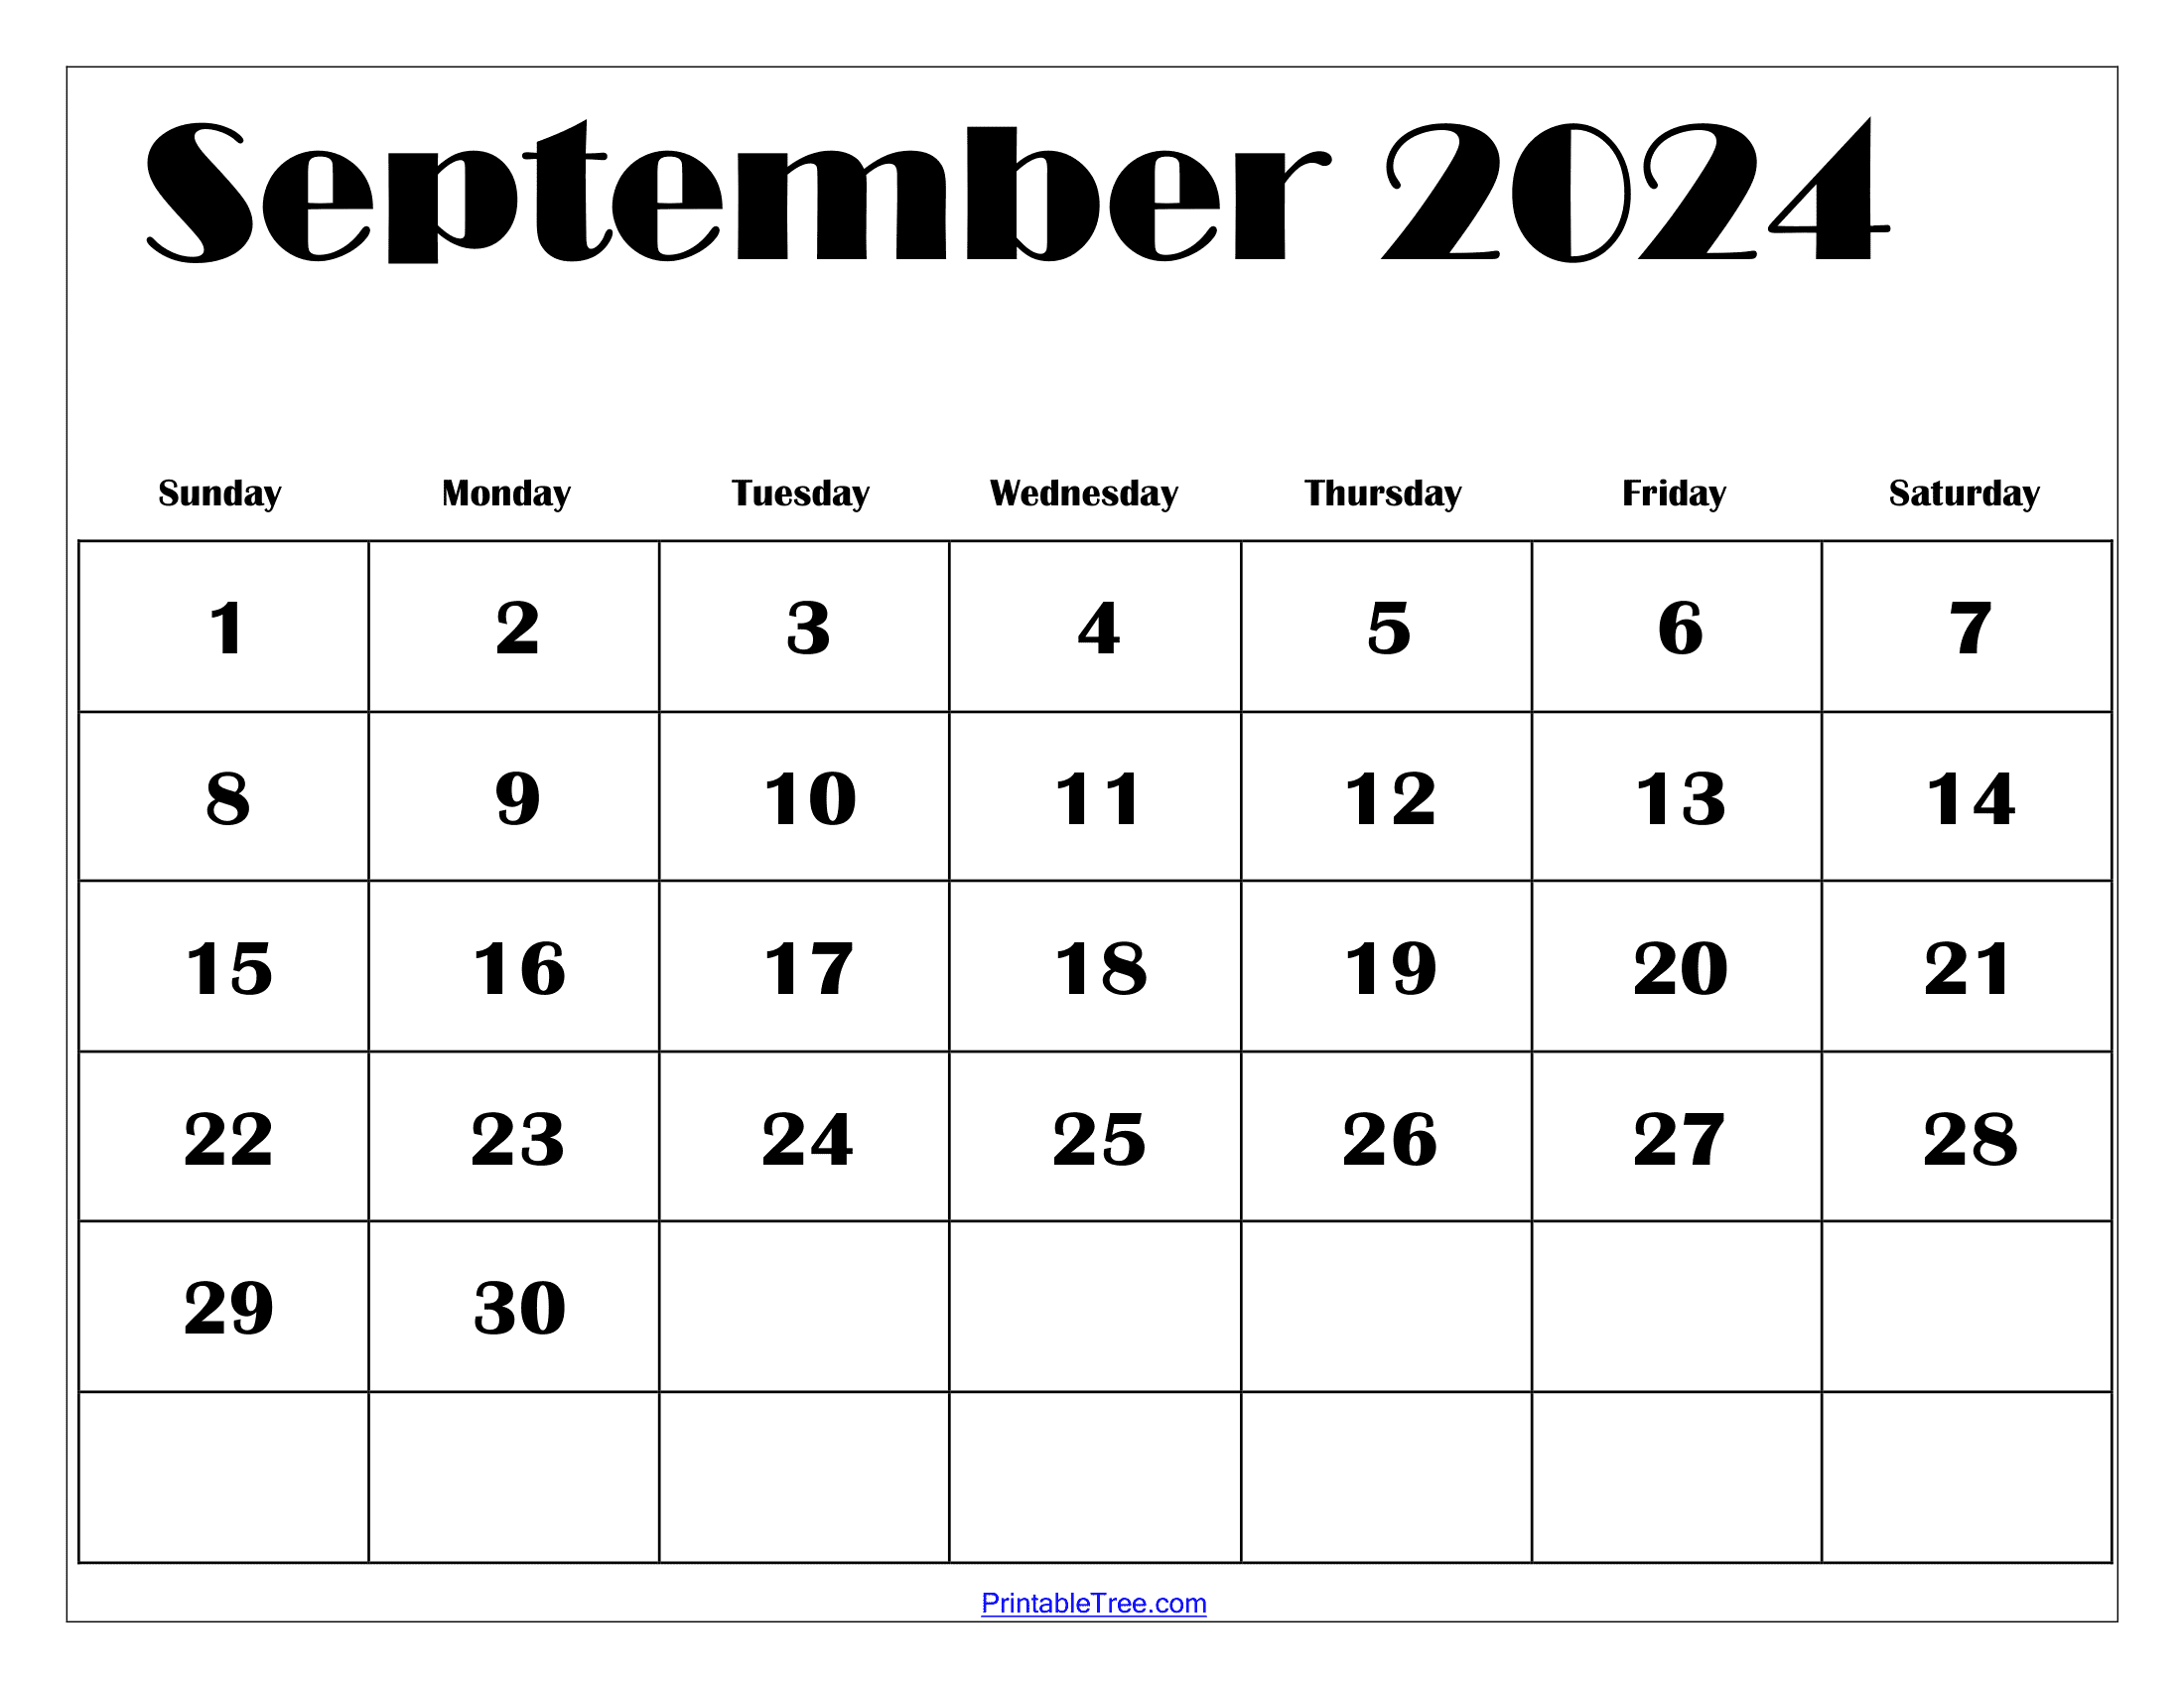 September 2024 Calendar Printable Pdf With Holidays for 2024 Calendar Printable September